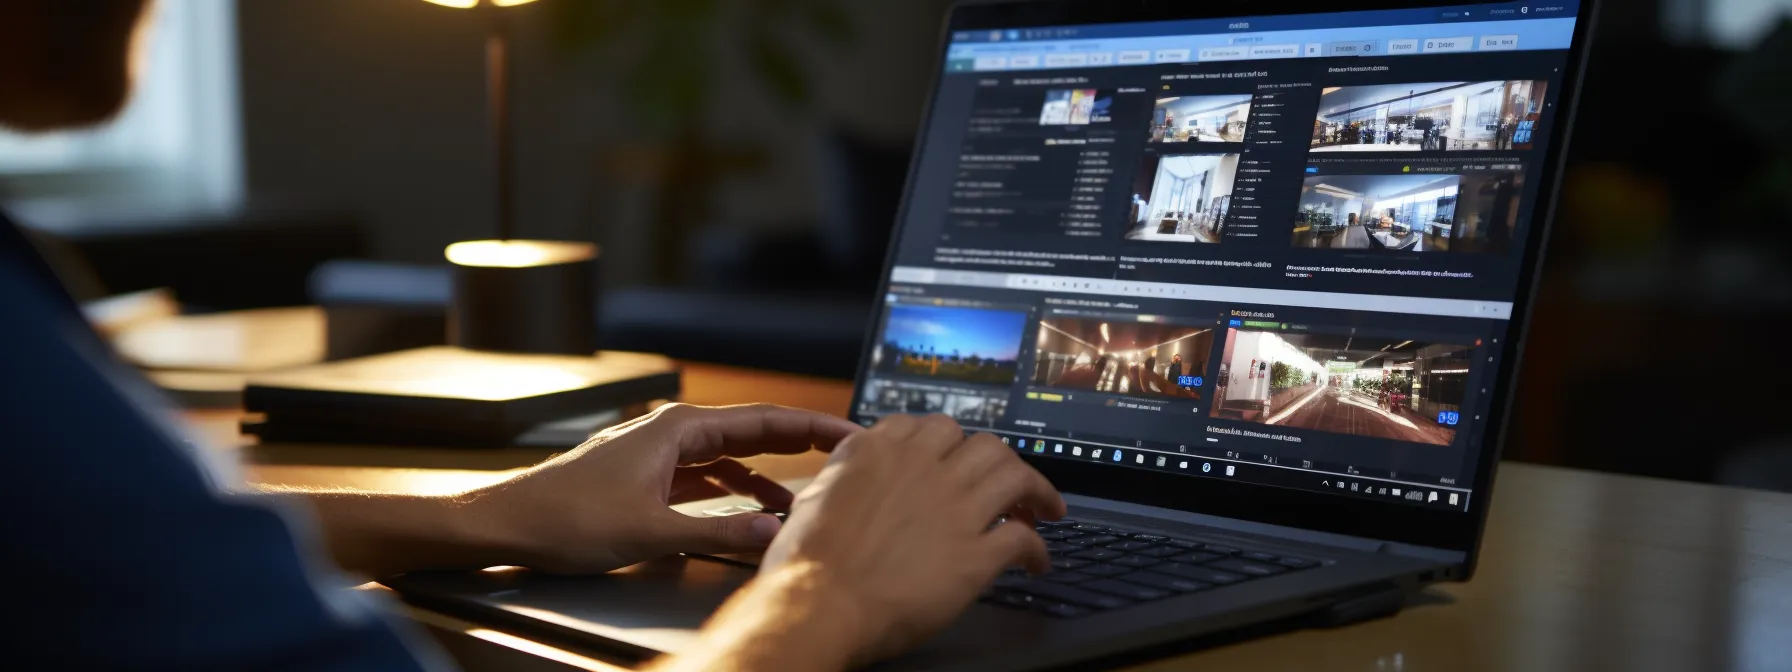 a person using a laptop to resolve a financial dispute through an online platform.